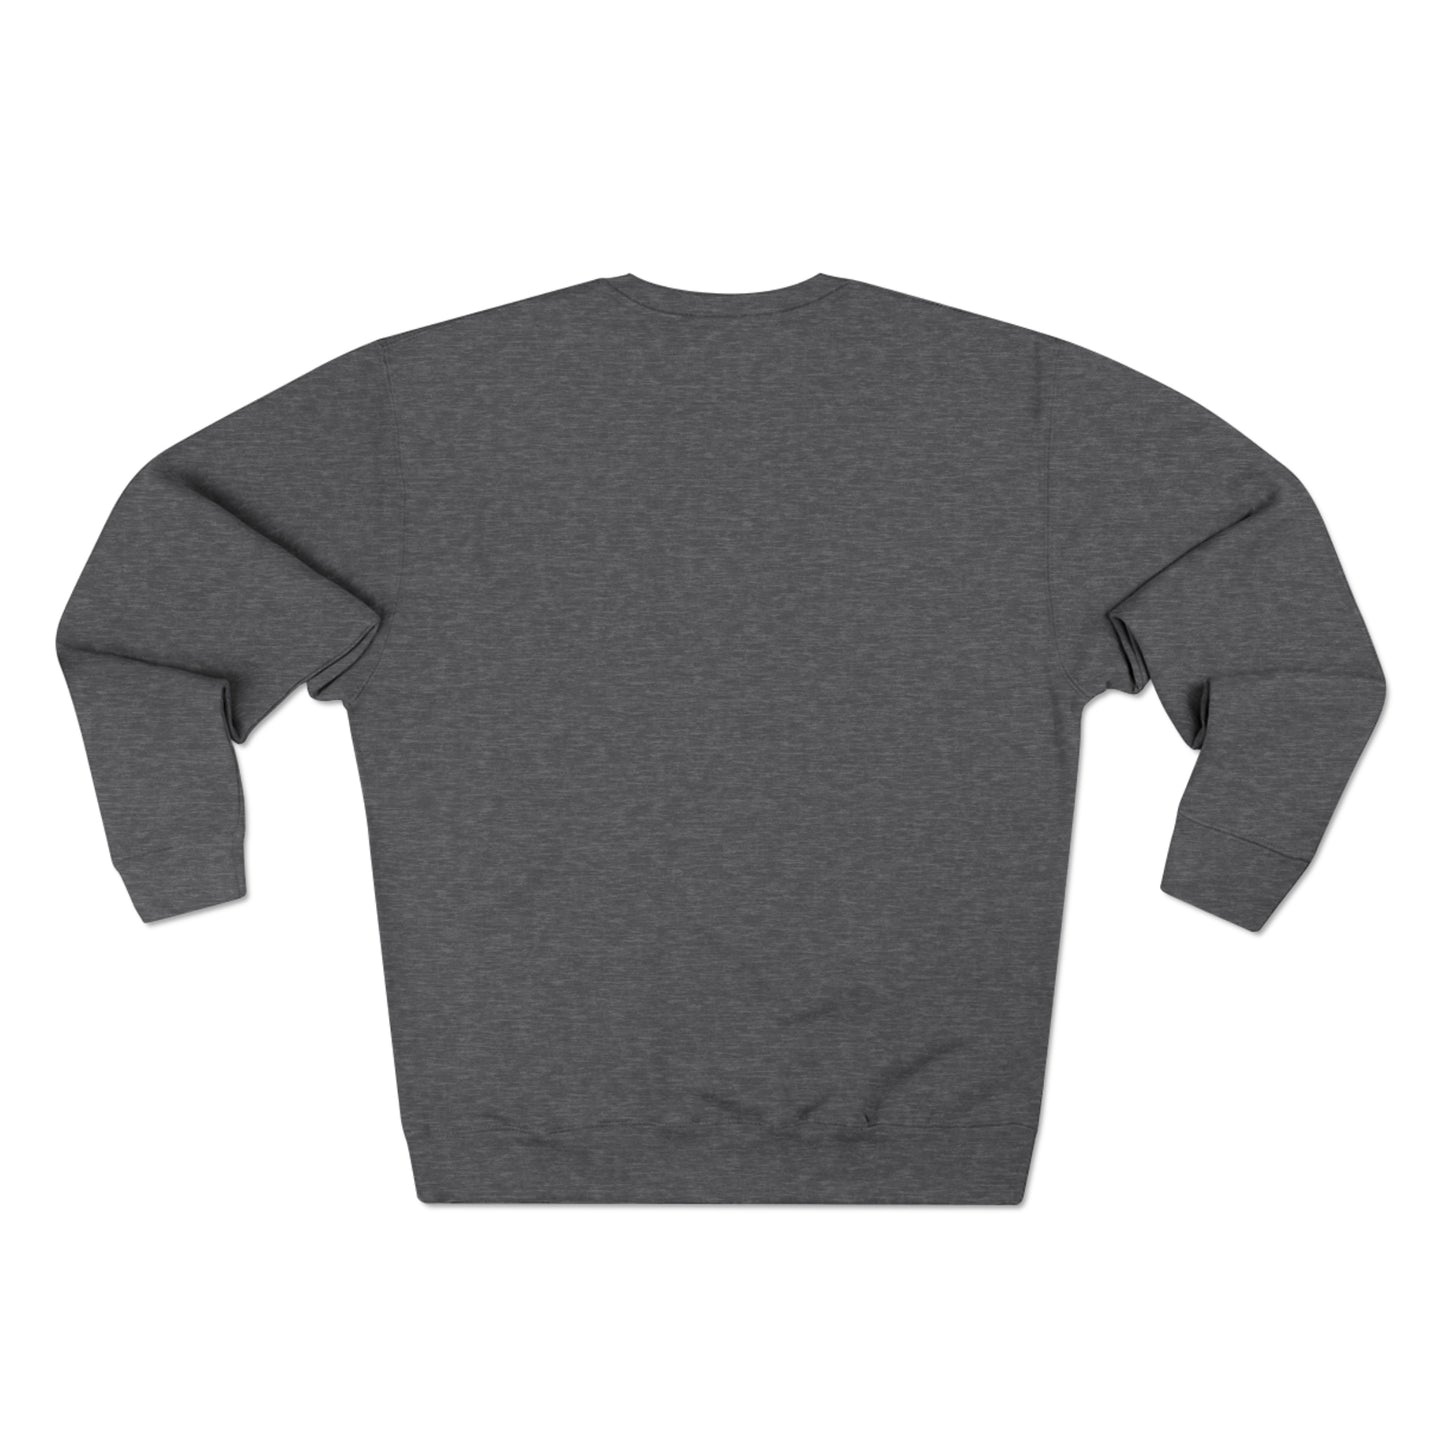 Jay Watch Icon Distressed - Unisex Premium Crewneck Sweatshirt